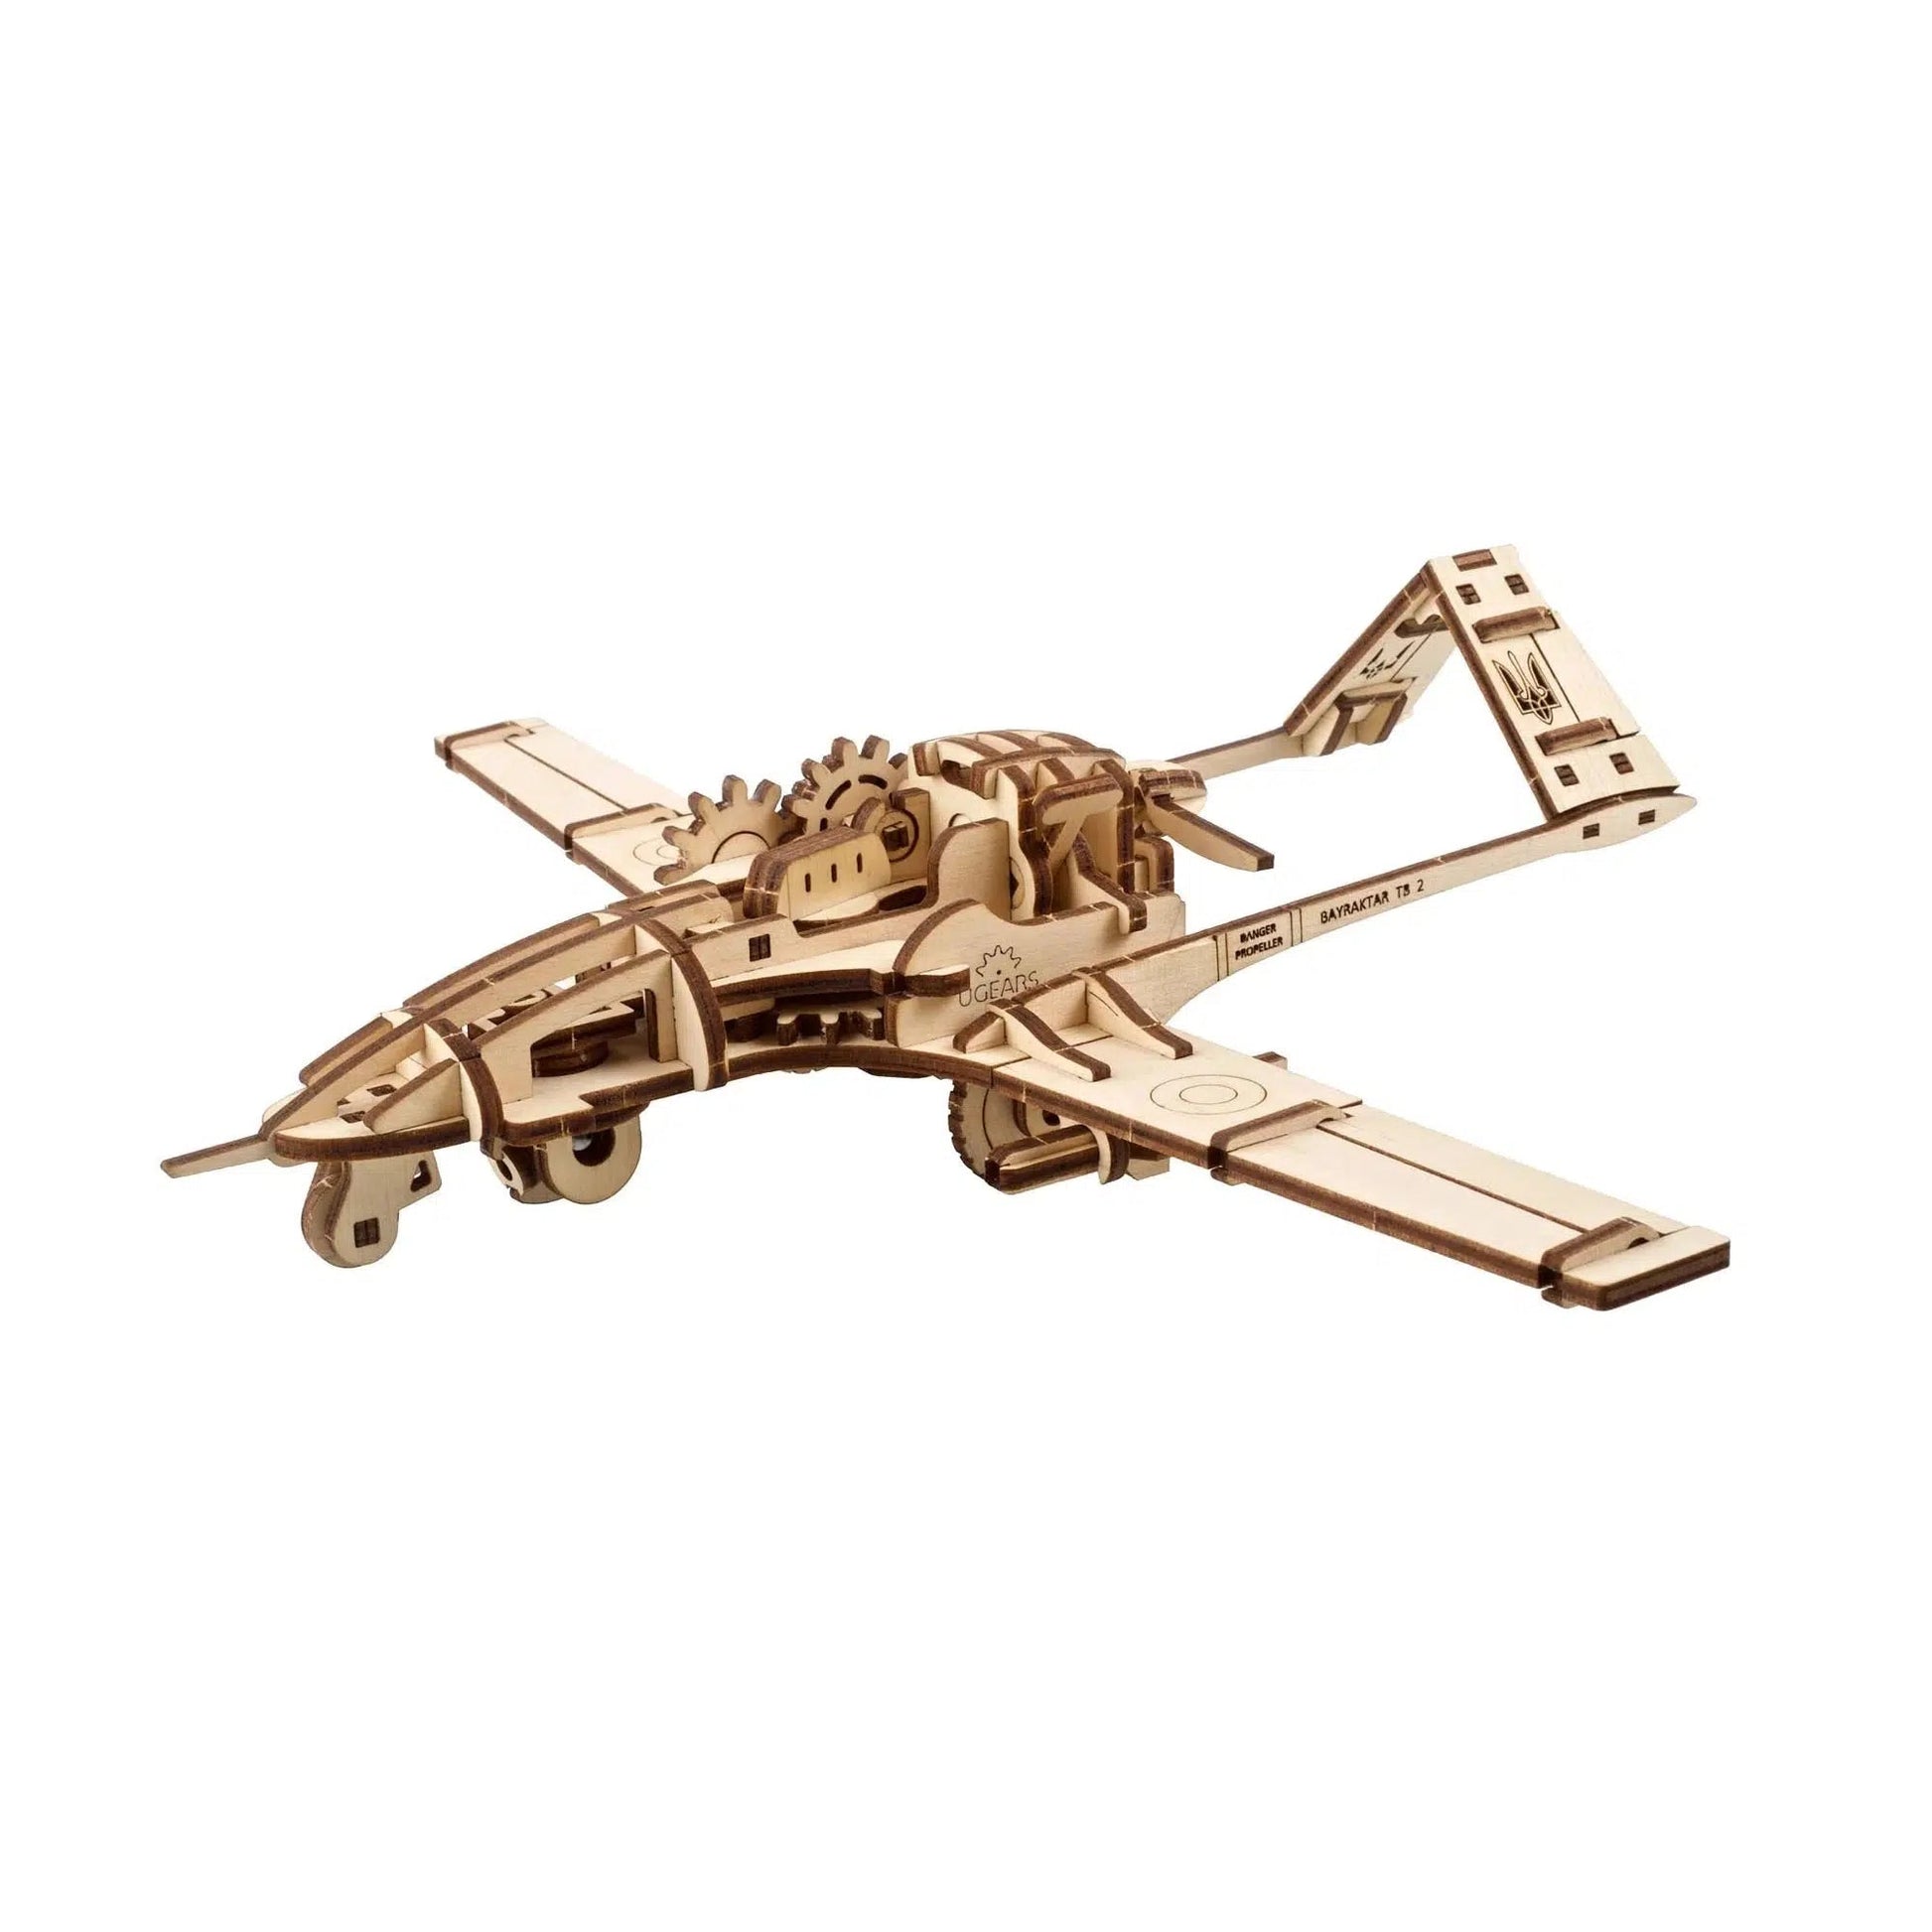 Bayraktar TB2 Combat Drone 3D Wood Model Kit UGEARS